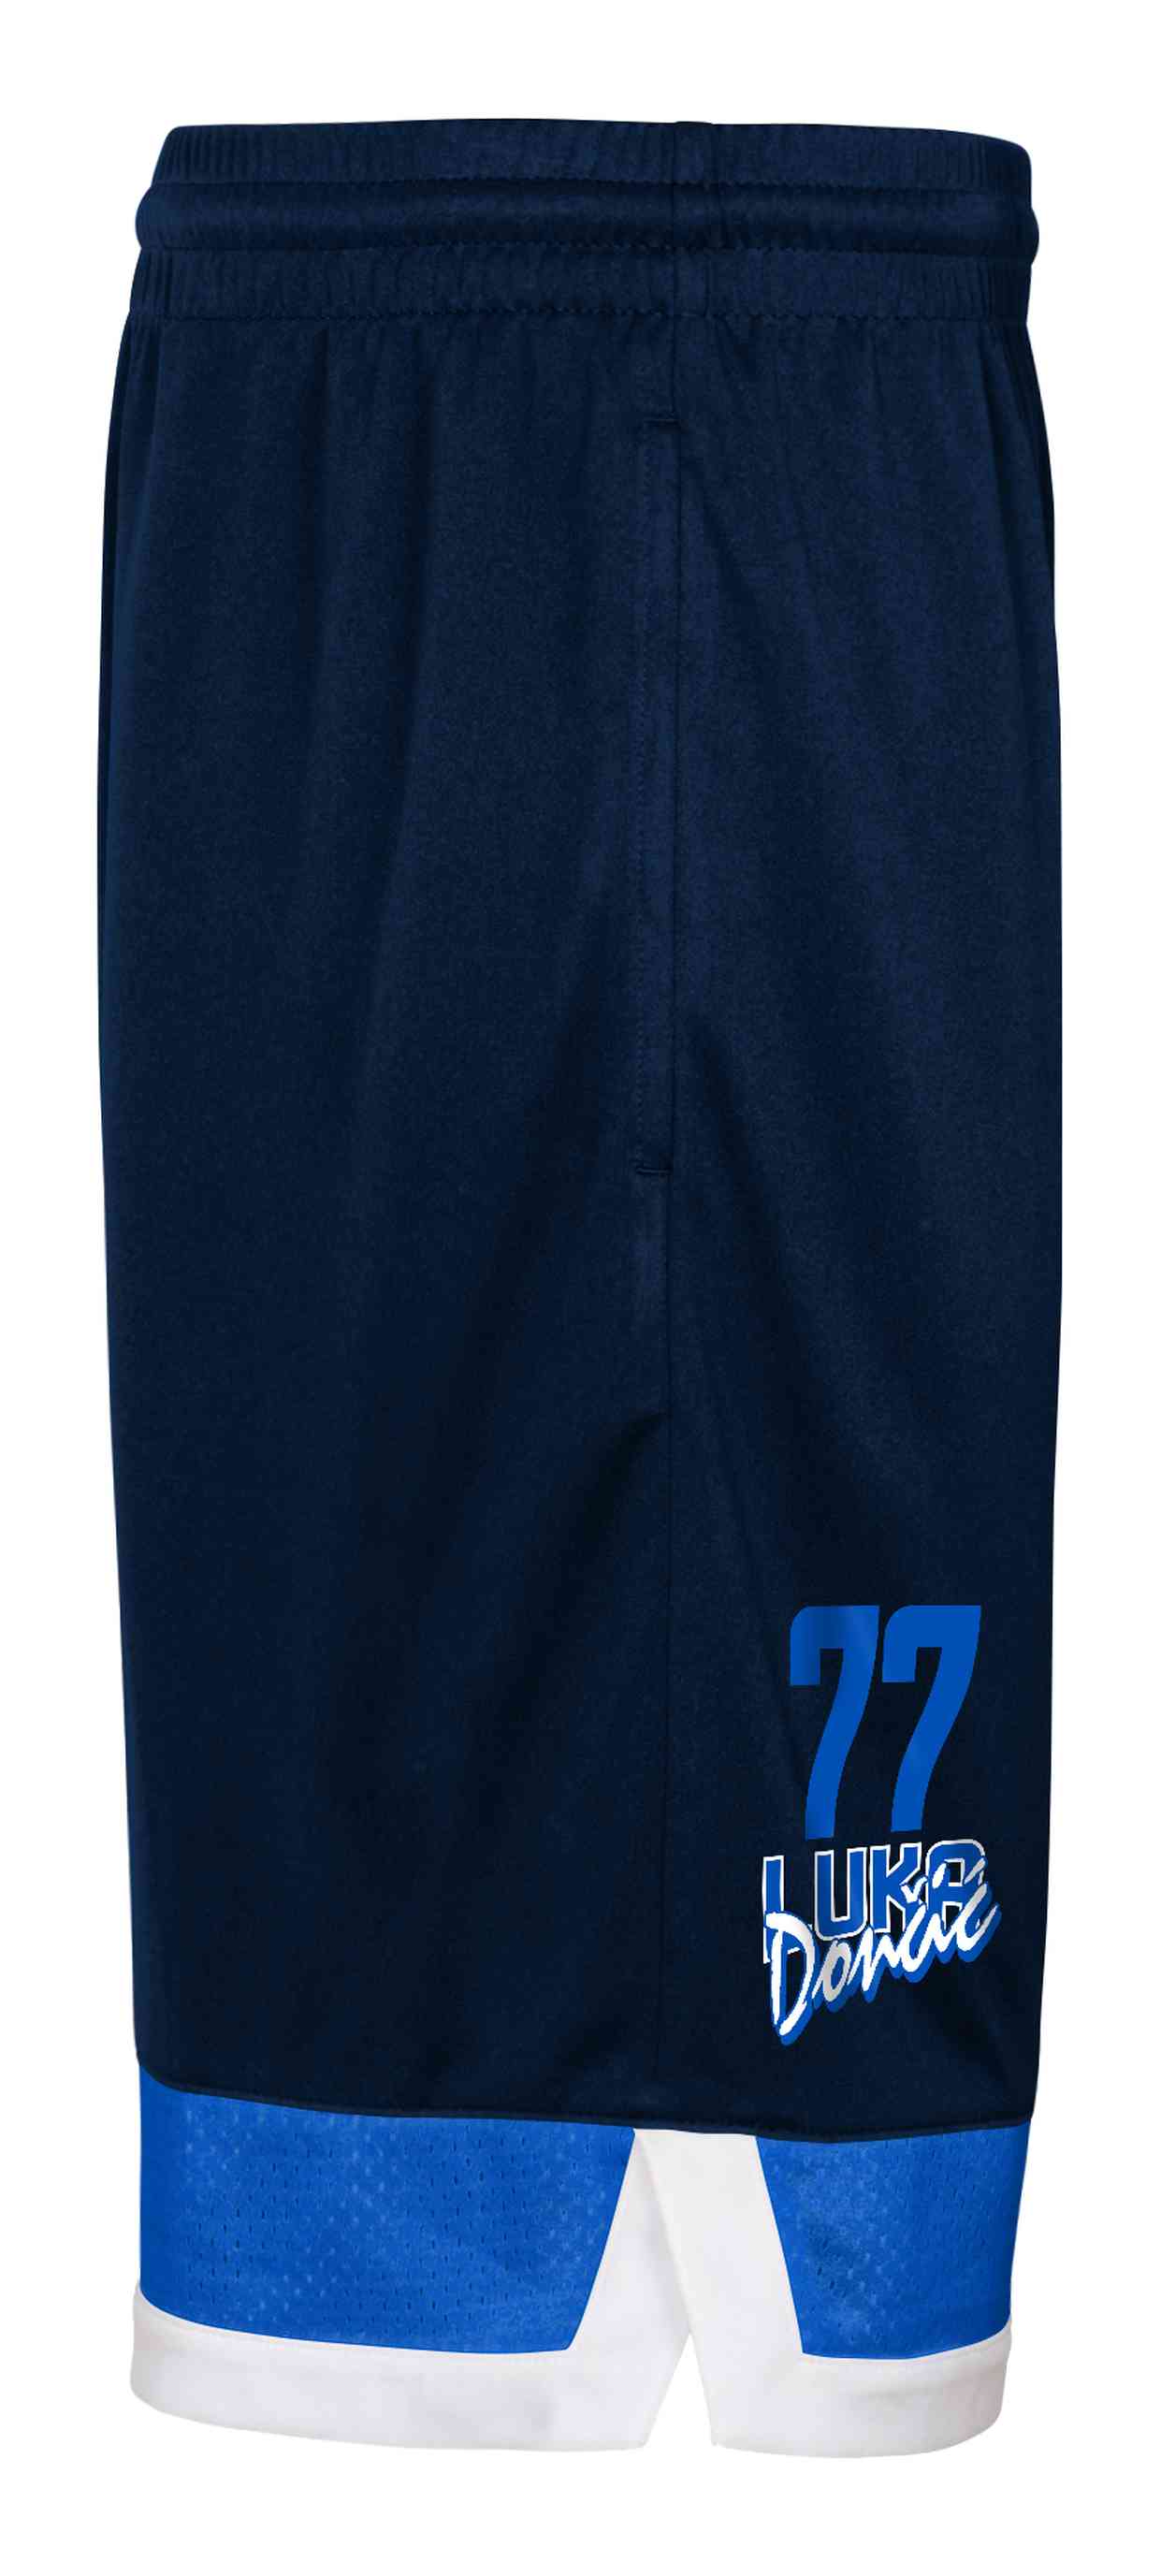 Outerstuff - NBA Dallas Mavericks Luka Doncic Active Basketball Shorts